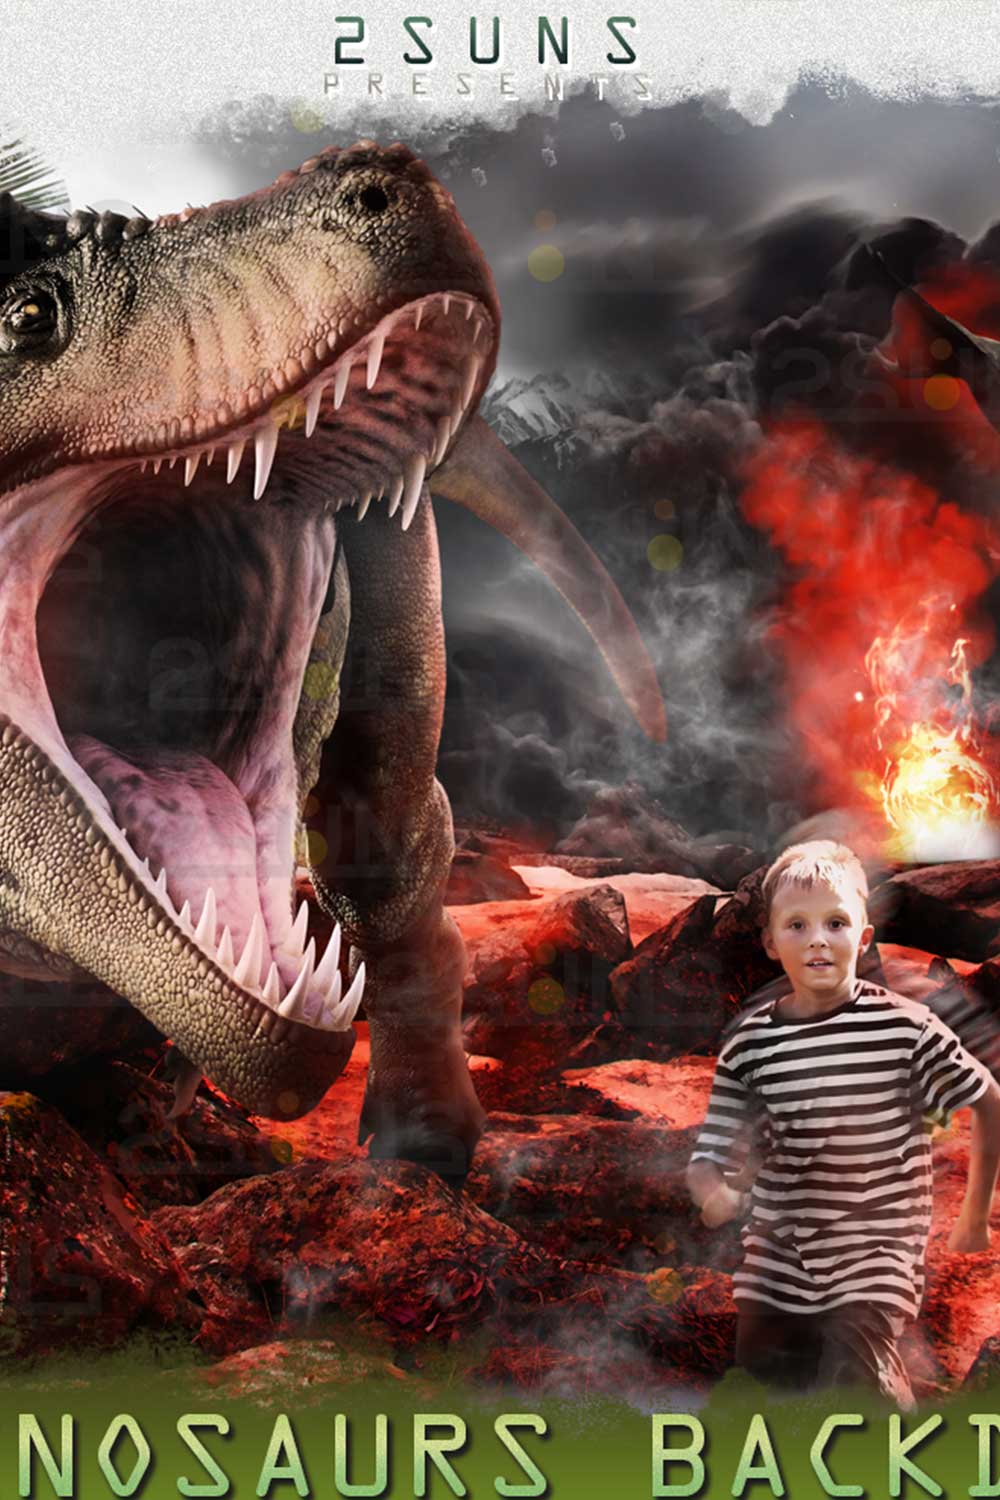 Dinosaur Backdrop And Tyrannosaurus Rex Overlays Pinterest Image.